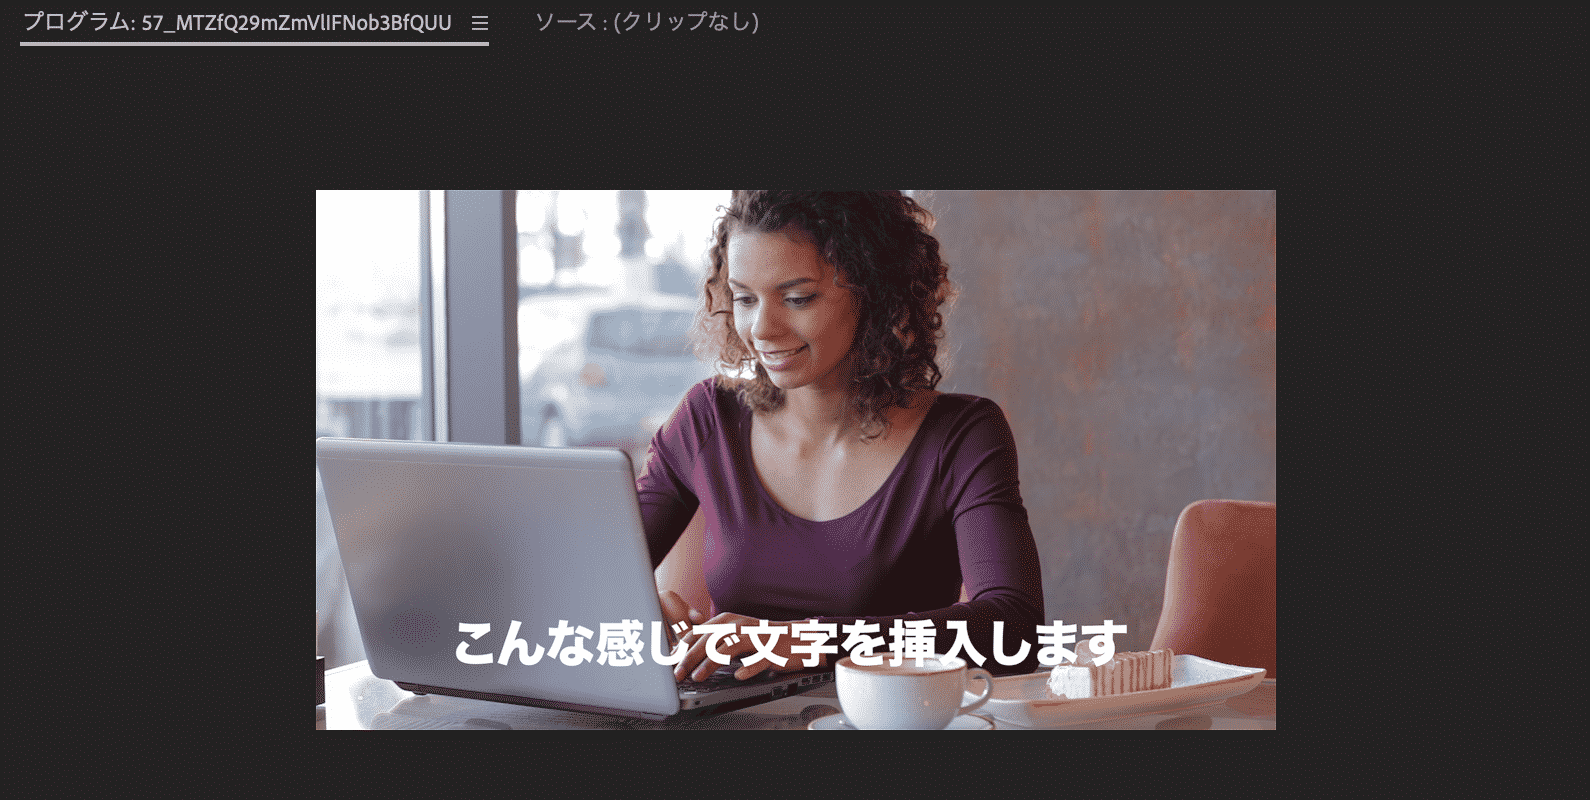 Adobe Premiere Proで文字を挿入して動きのあるテロップを作る方法 山田どうそんブログ